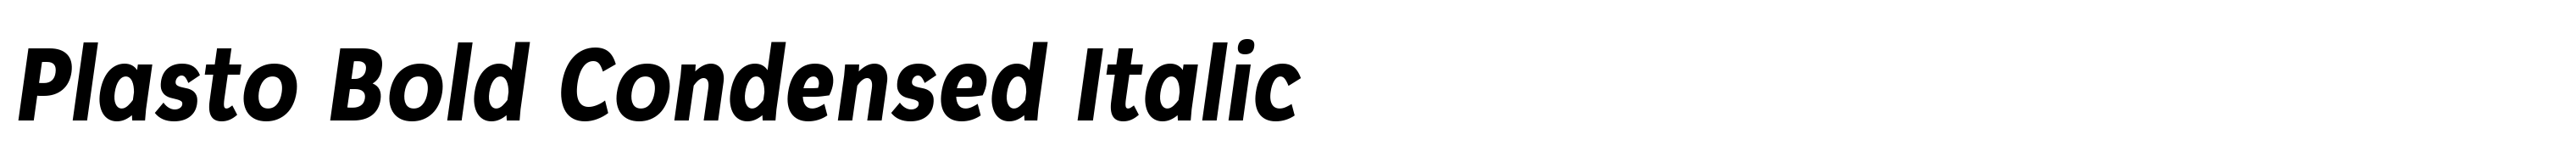 Plasto Bold Condensed Italic